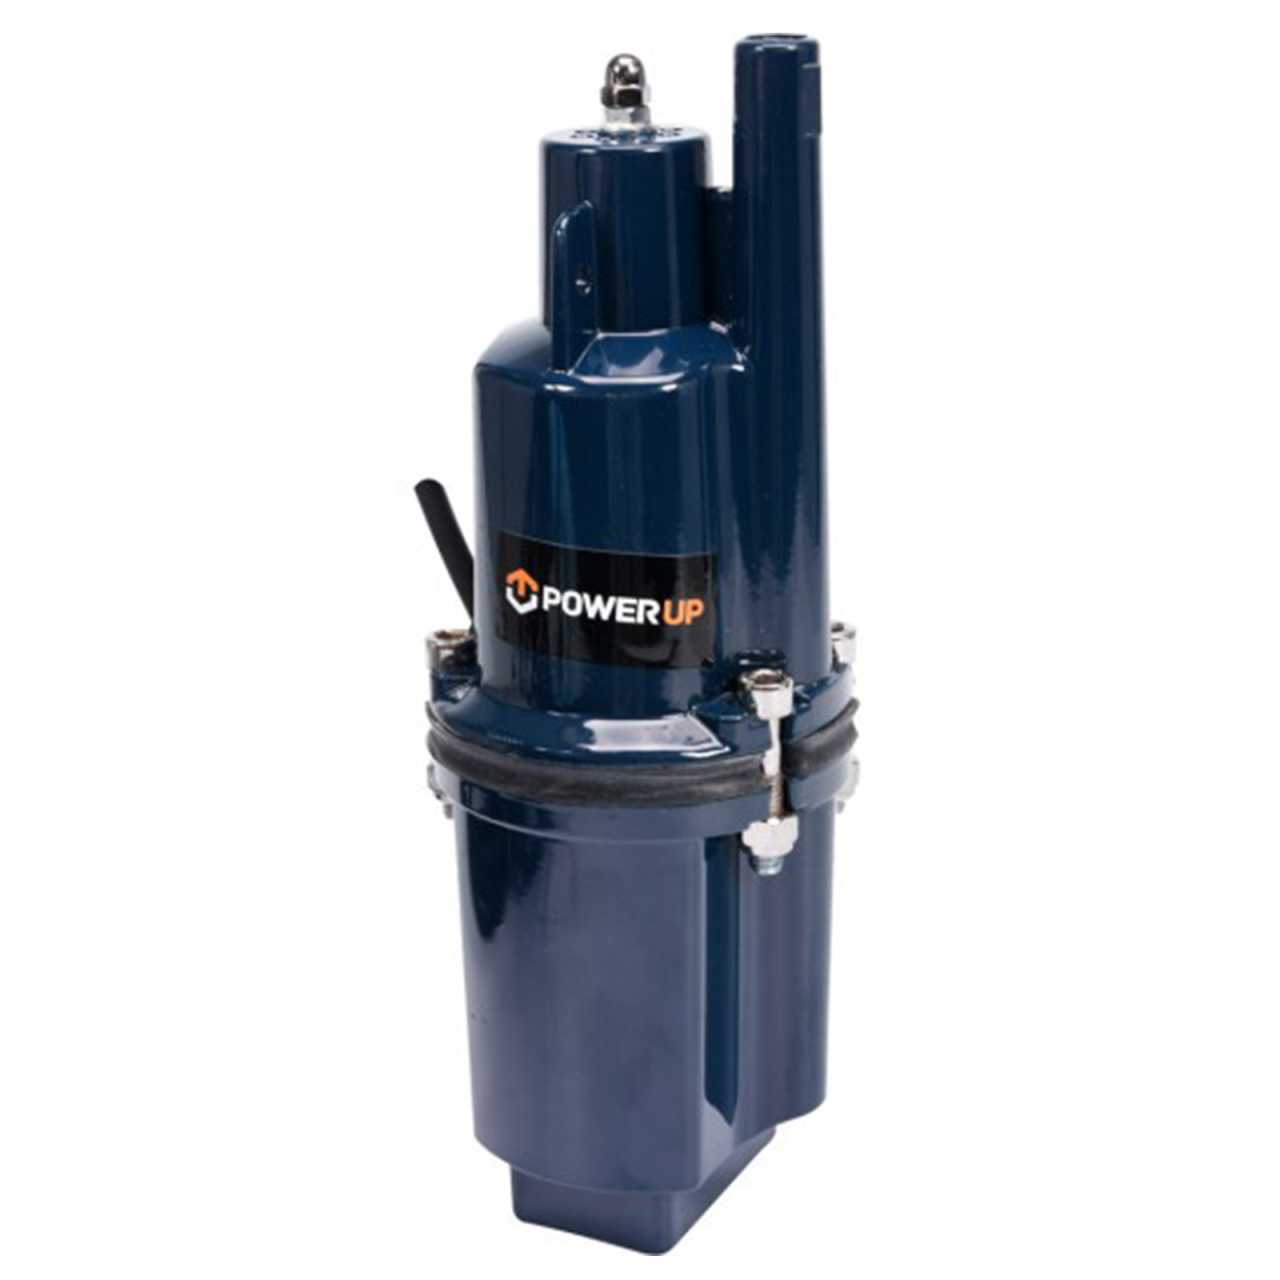 PowerUP Membran Pumpe 280 Watt / 1050l 79942